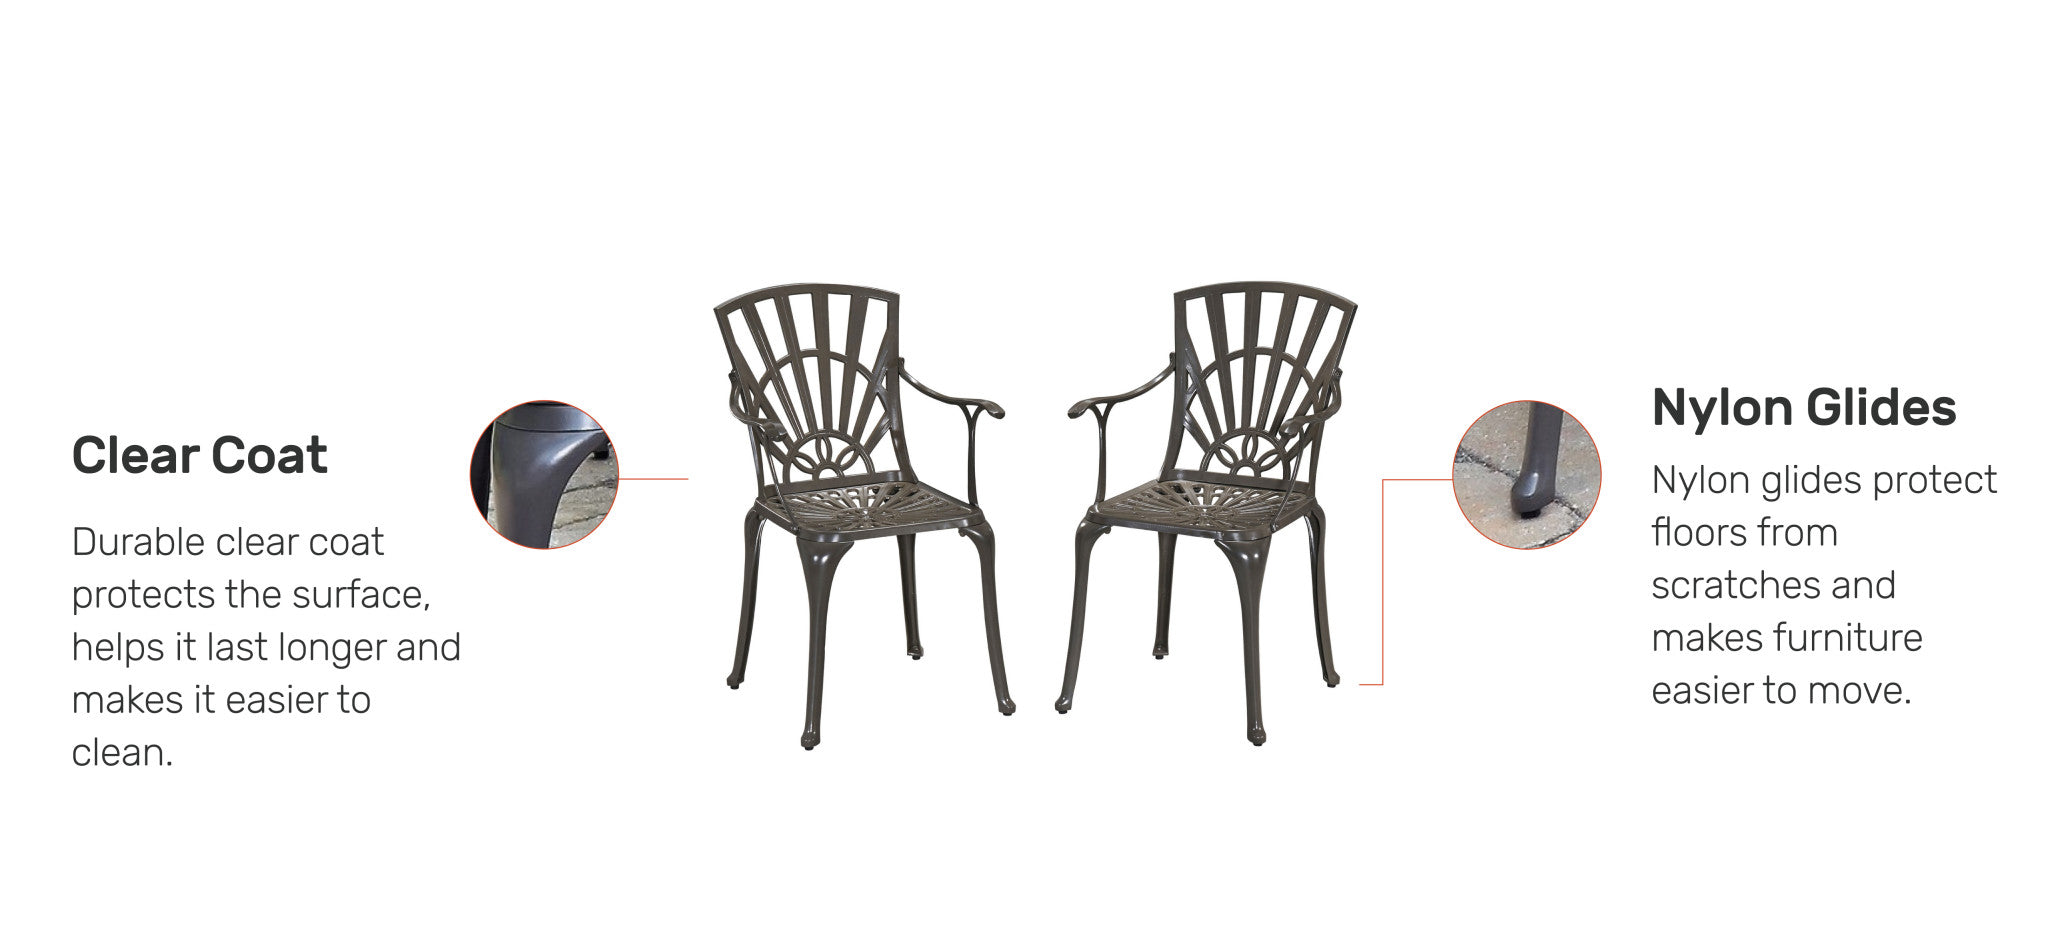 Grenada Outdoor Chair Pair by Homestyles - Khaki Gray - Aluminum - 6661-80